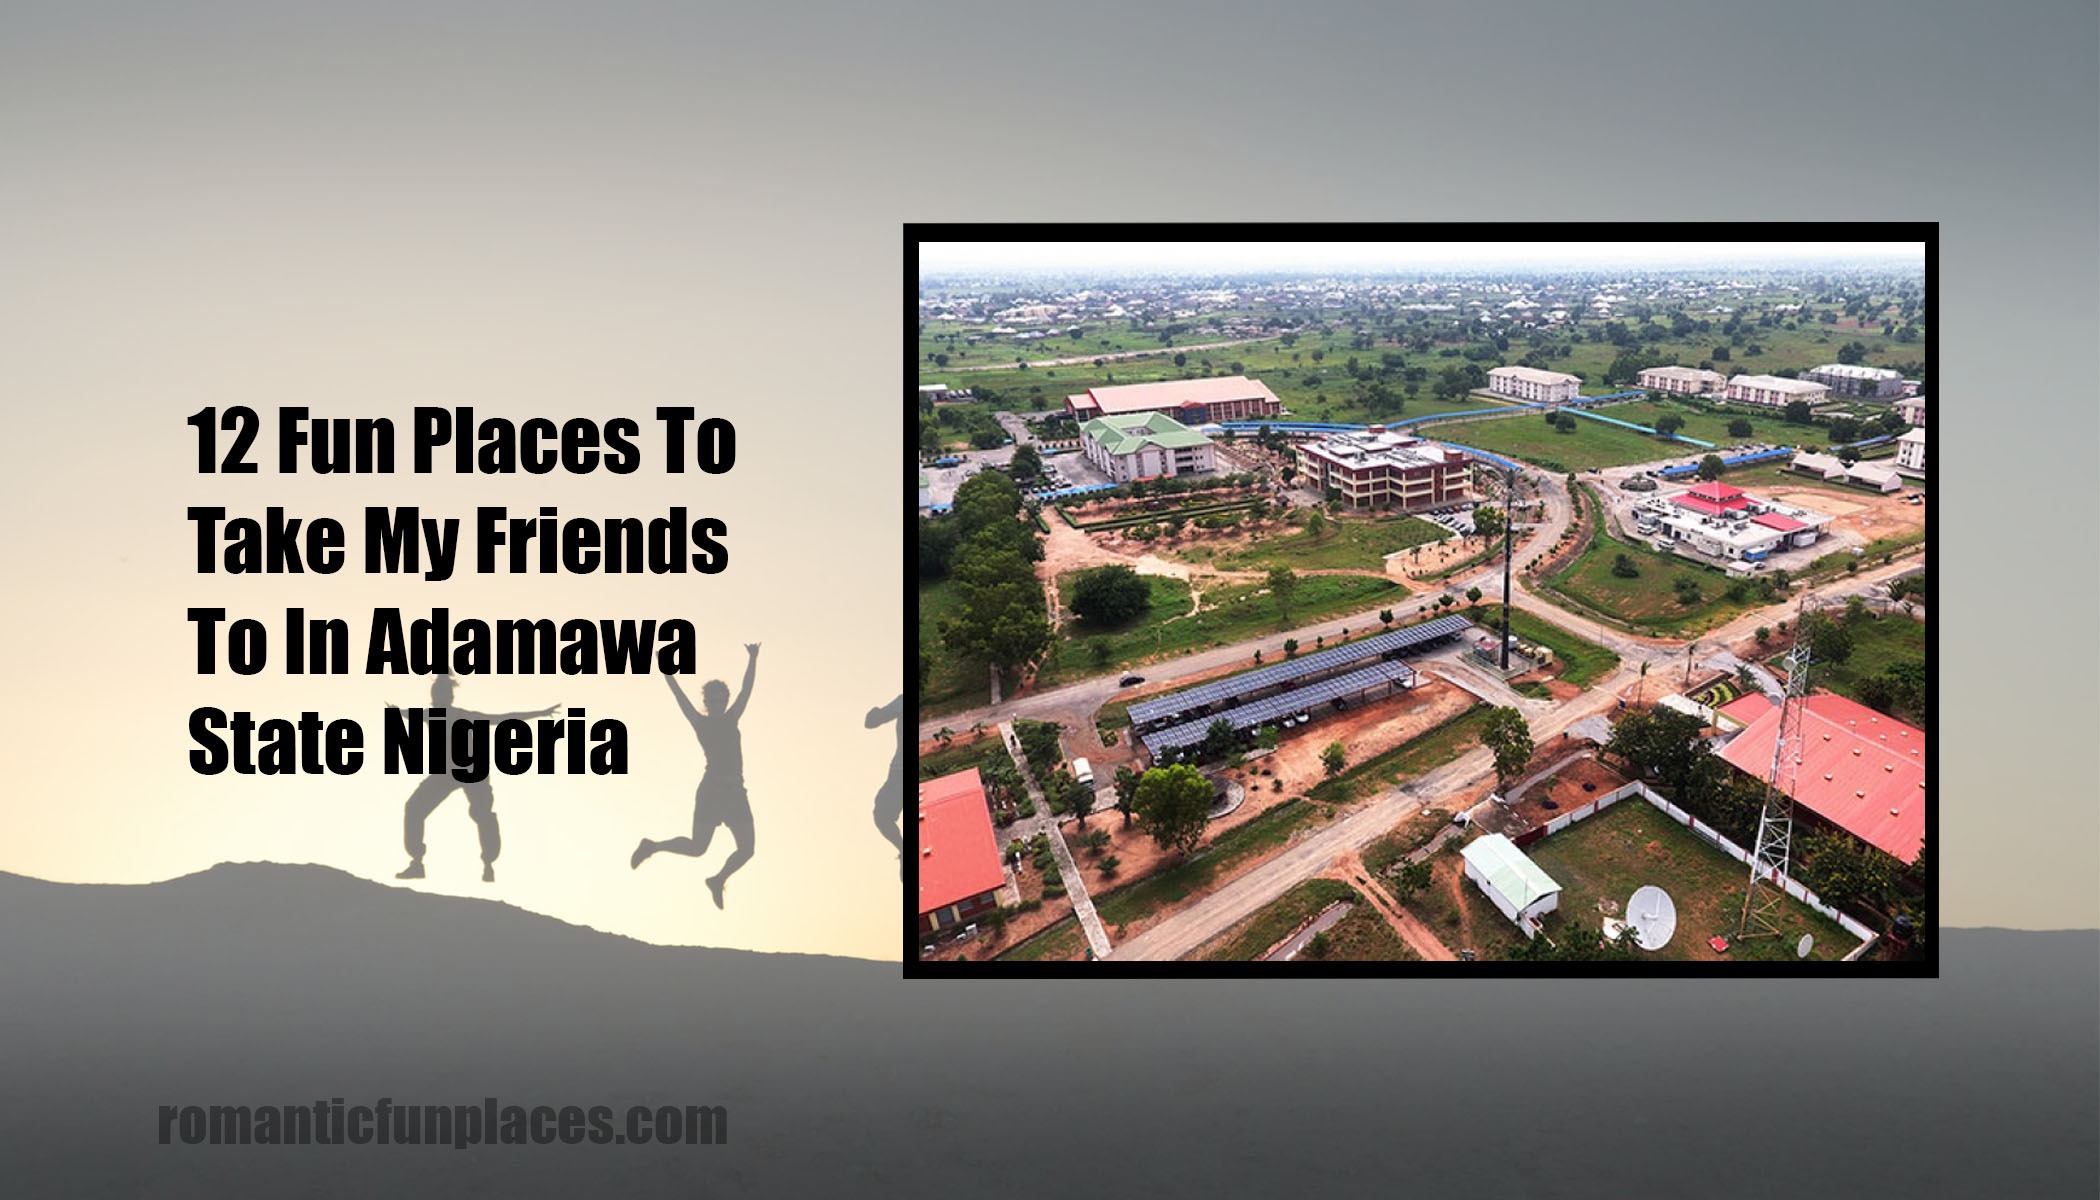 12 Fun Places To Take My Friends To In Adamawa State Nigeria